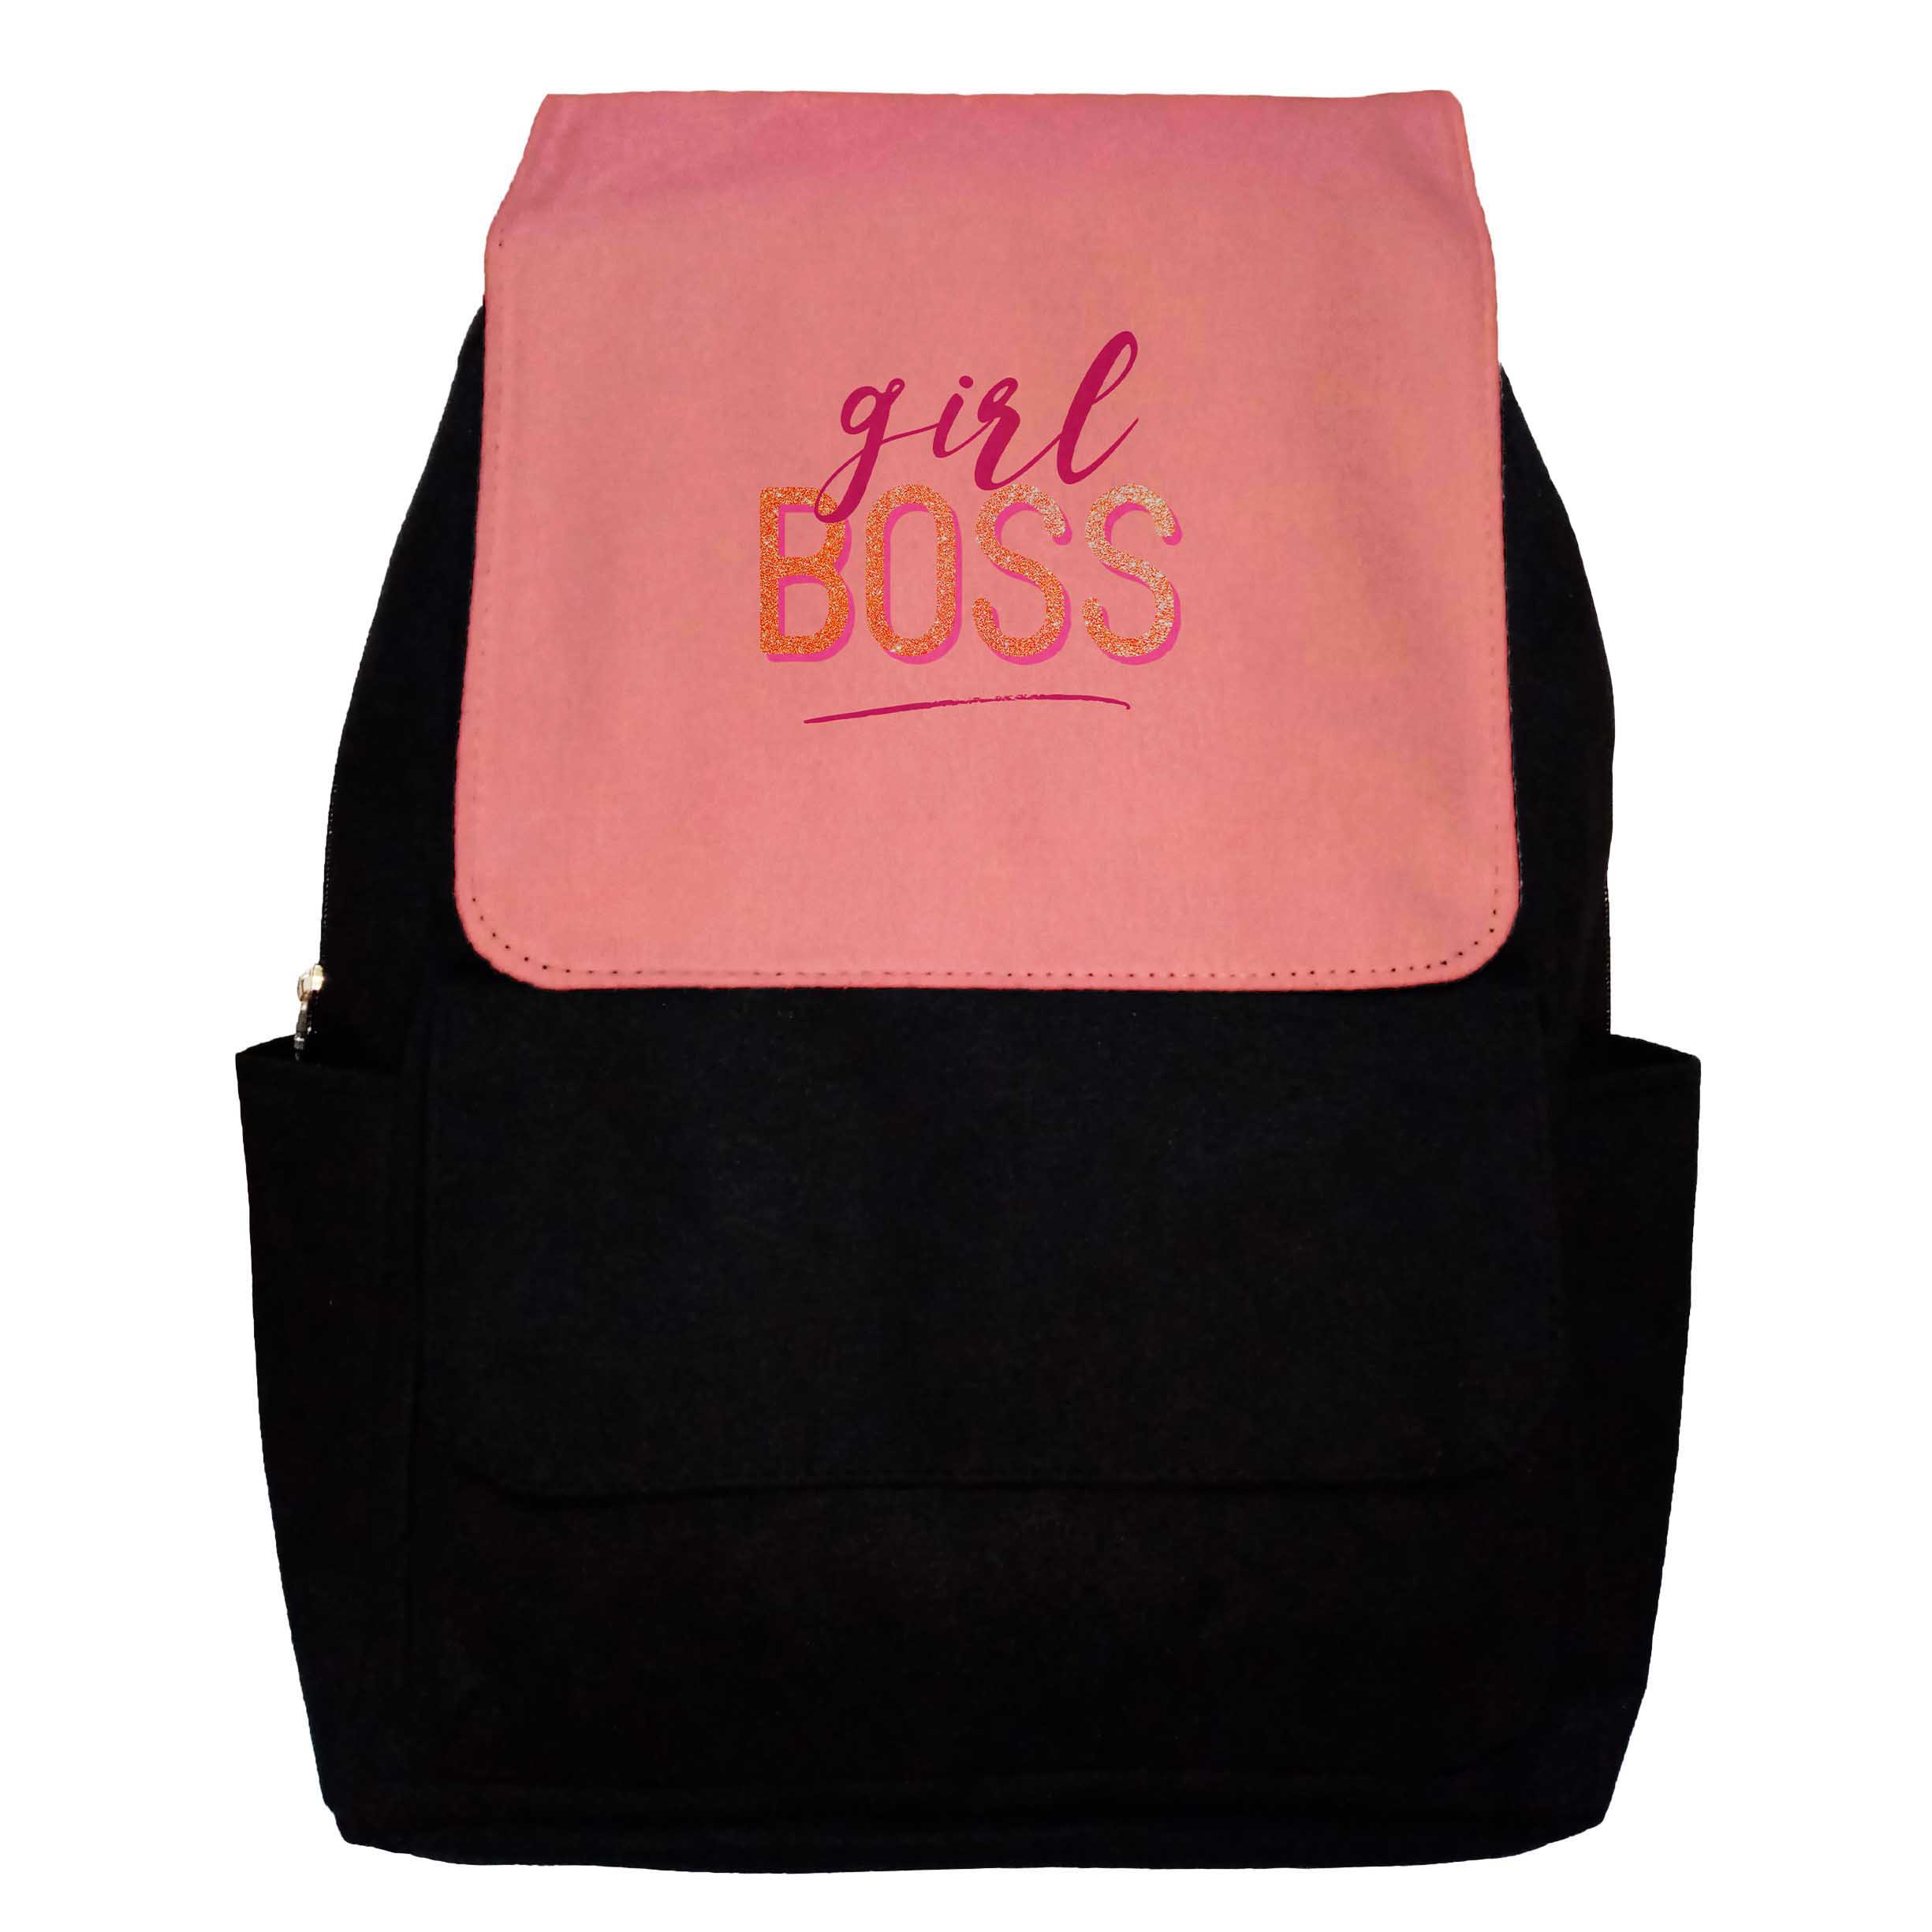  کوله پشتی دخترانه طرح Girl Boss مدل G21